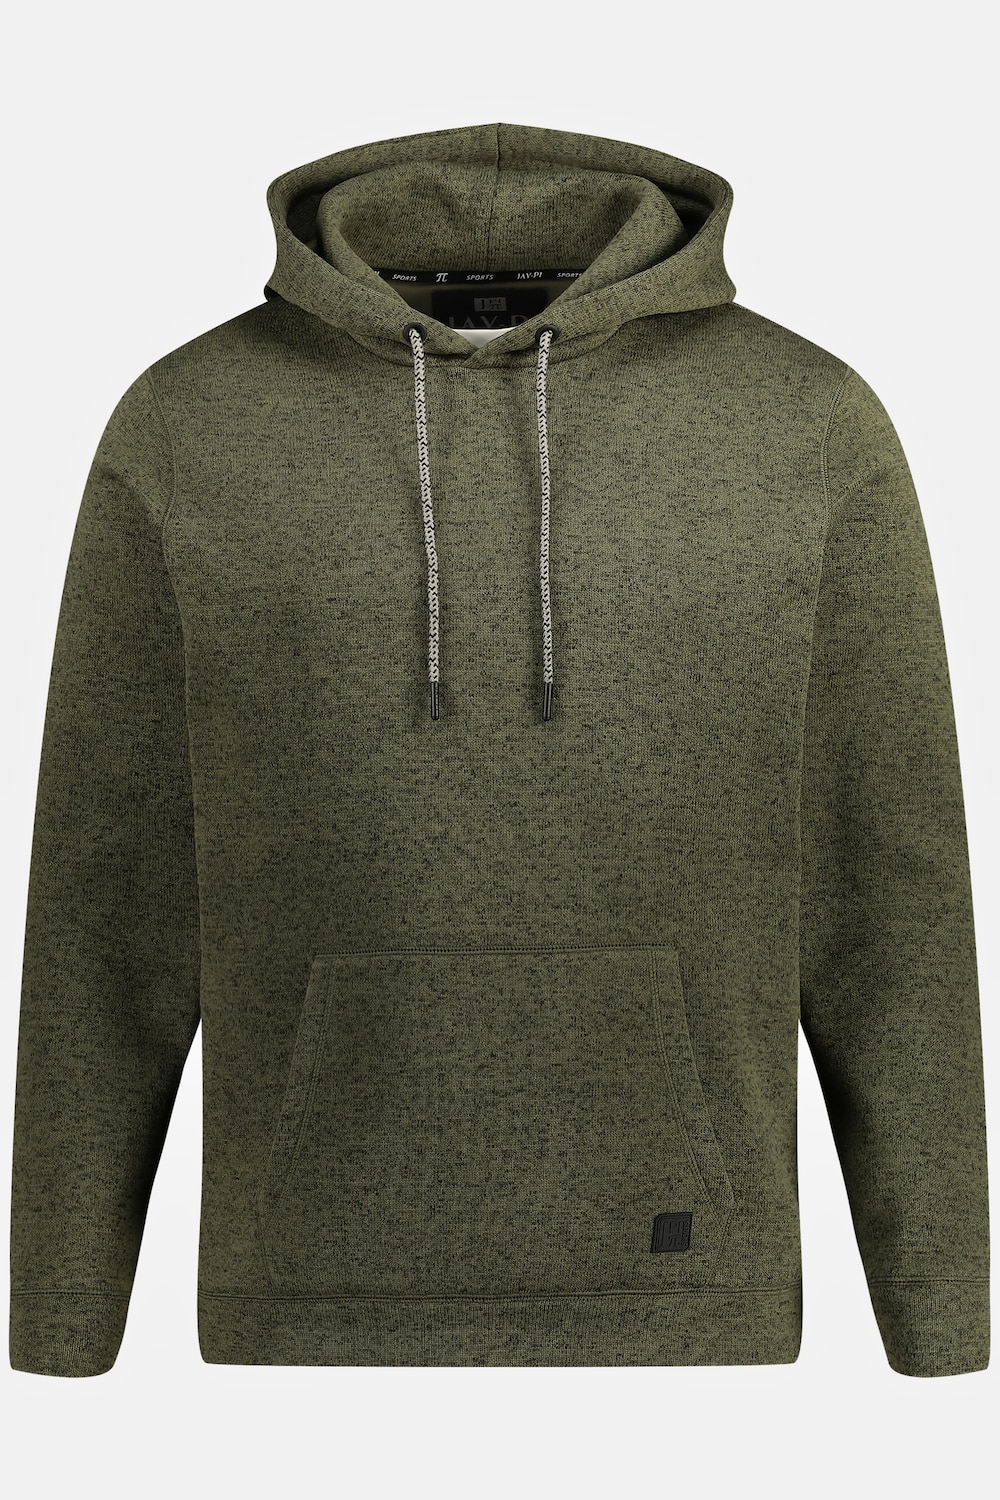 Grote Maten JAY-PI gebreid fleece hoodiemale, groen, Maat: 5XL, Polyester, JAY-PI